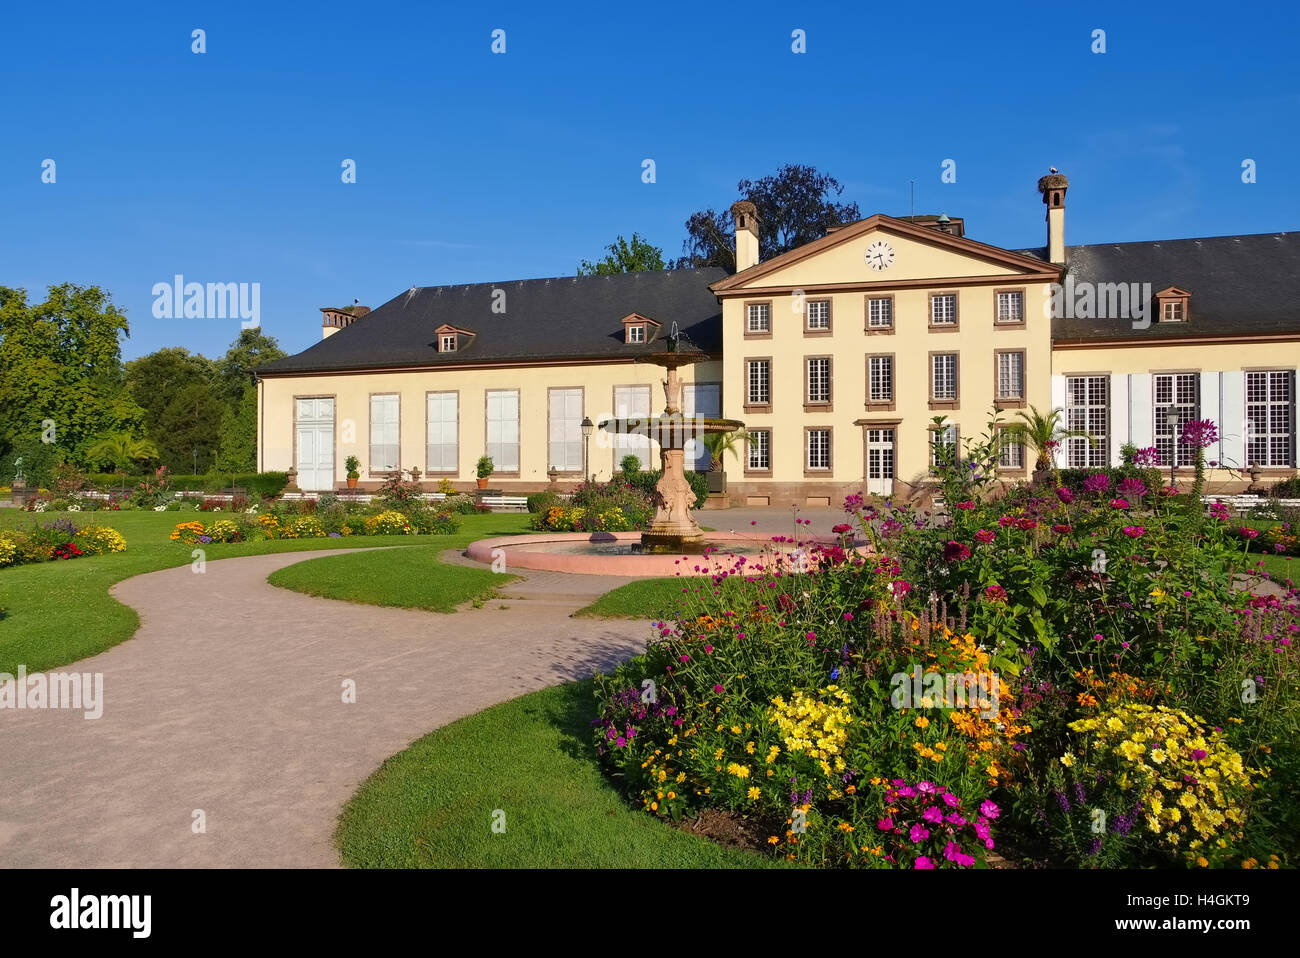 Strasbourg, Der schöne Orangerie-Park, Elsass - le parc de l'Orangerie de Strasbourg en Alsace, France Banque D'Images